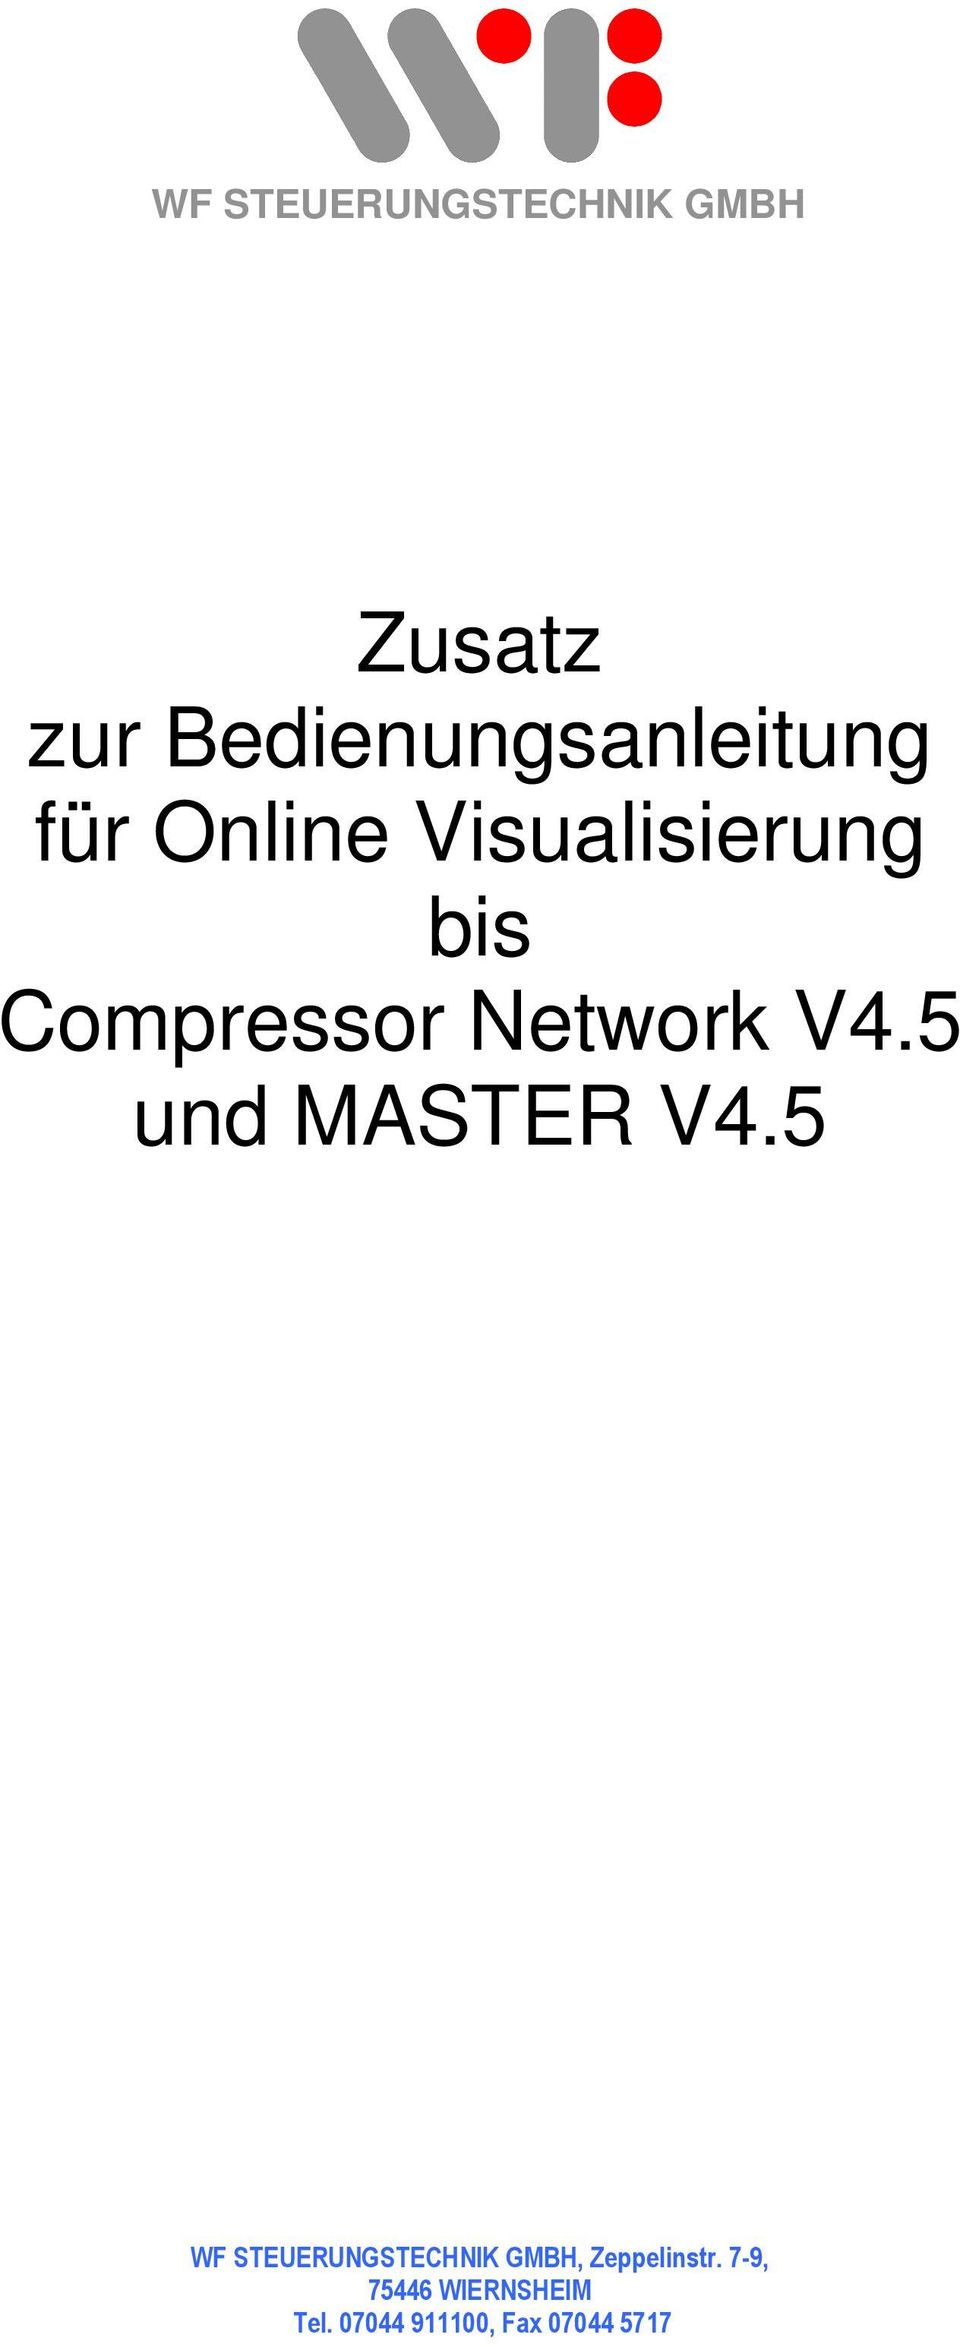 Compressor Network V4.5 und MASTER V4.